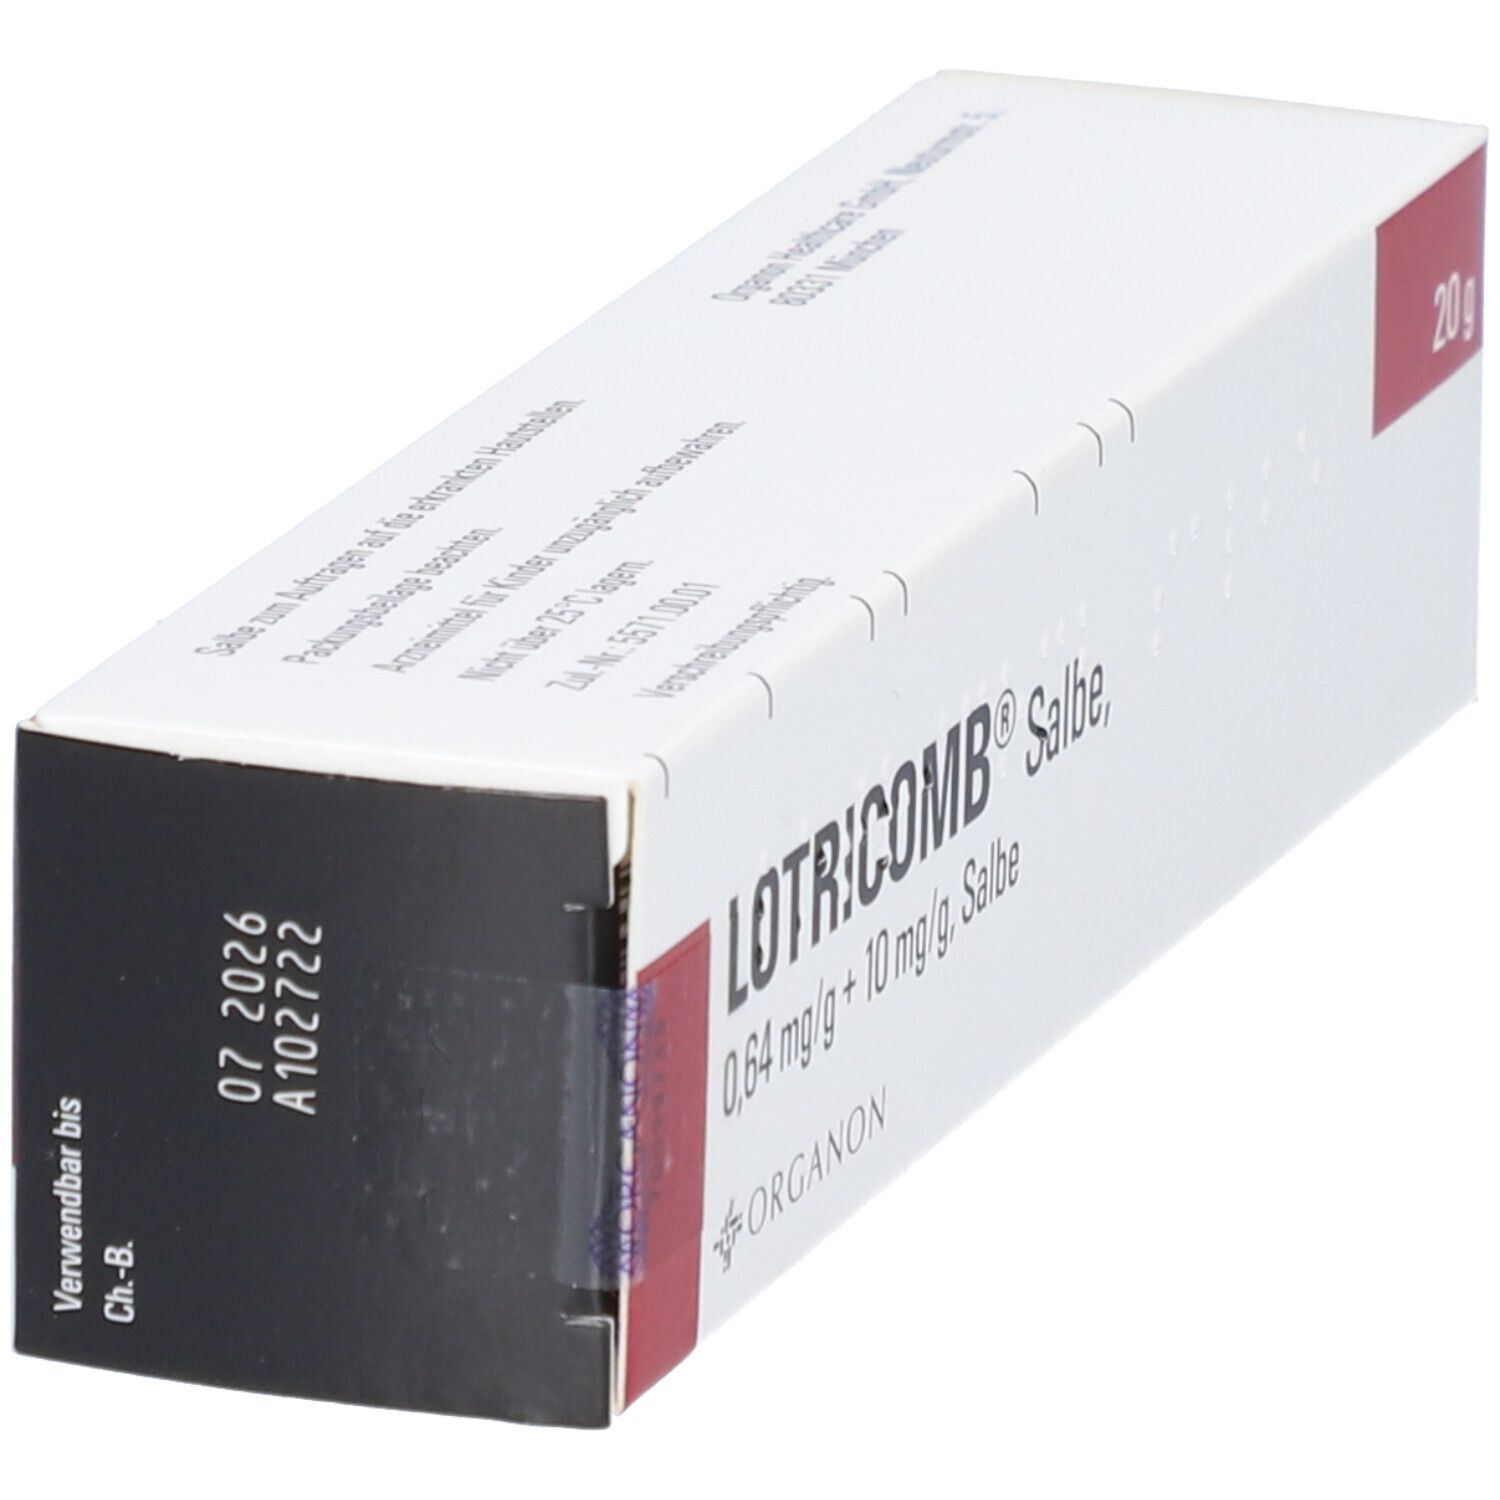 LOTRICOMB® Salbe 0,64 mg/g + 10 mg/g